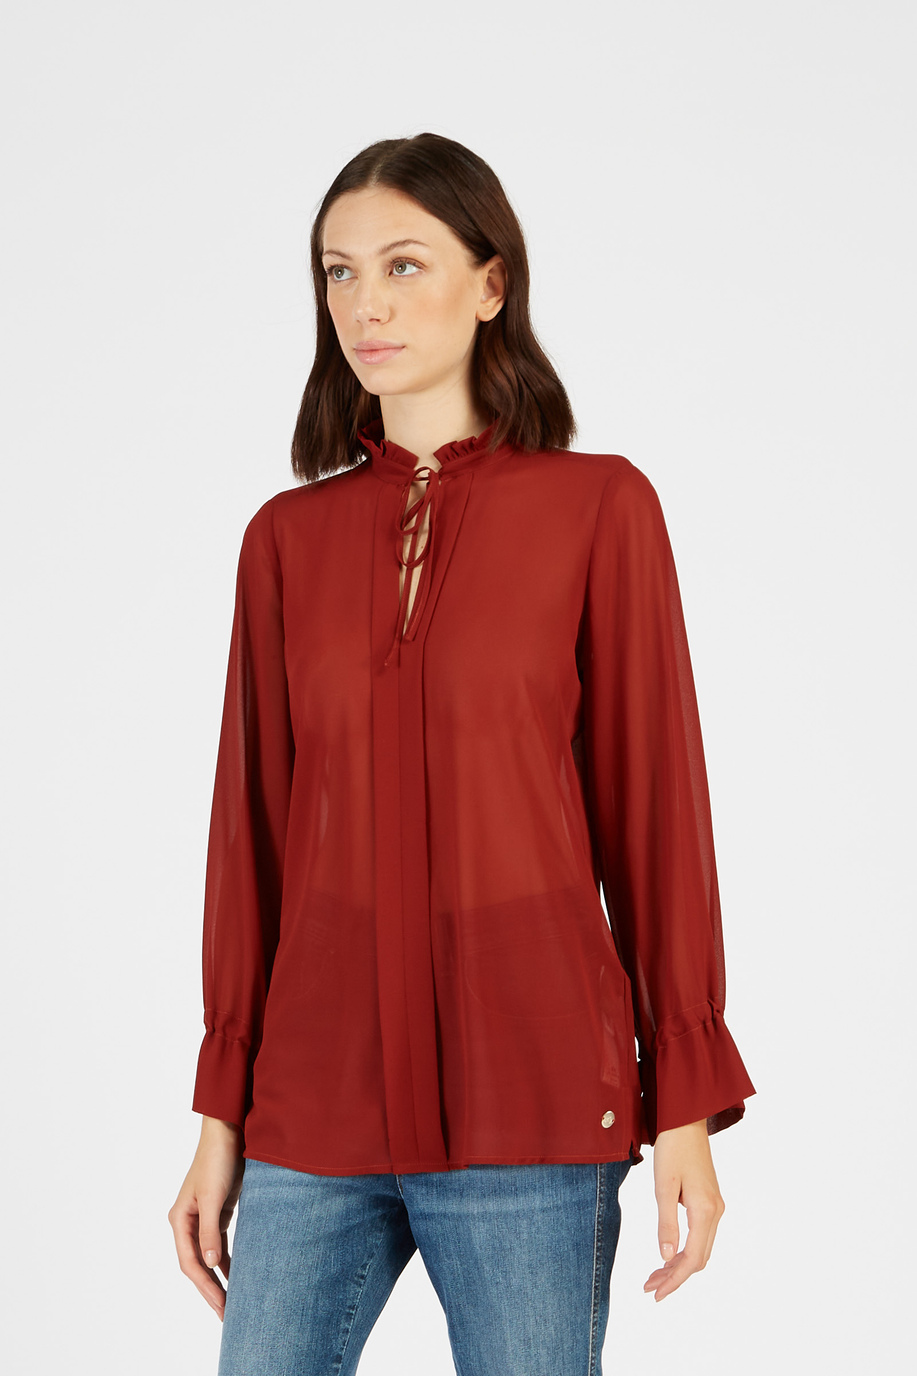 Women’s shirt Argentina fabric georgette regular fit long sleeves - Shirts | La Martina - Official Online Shop